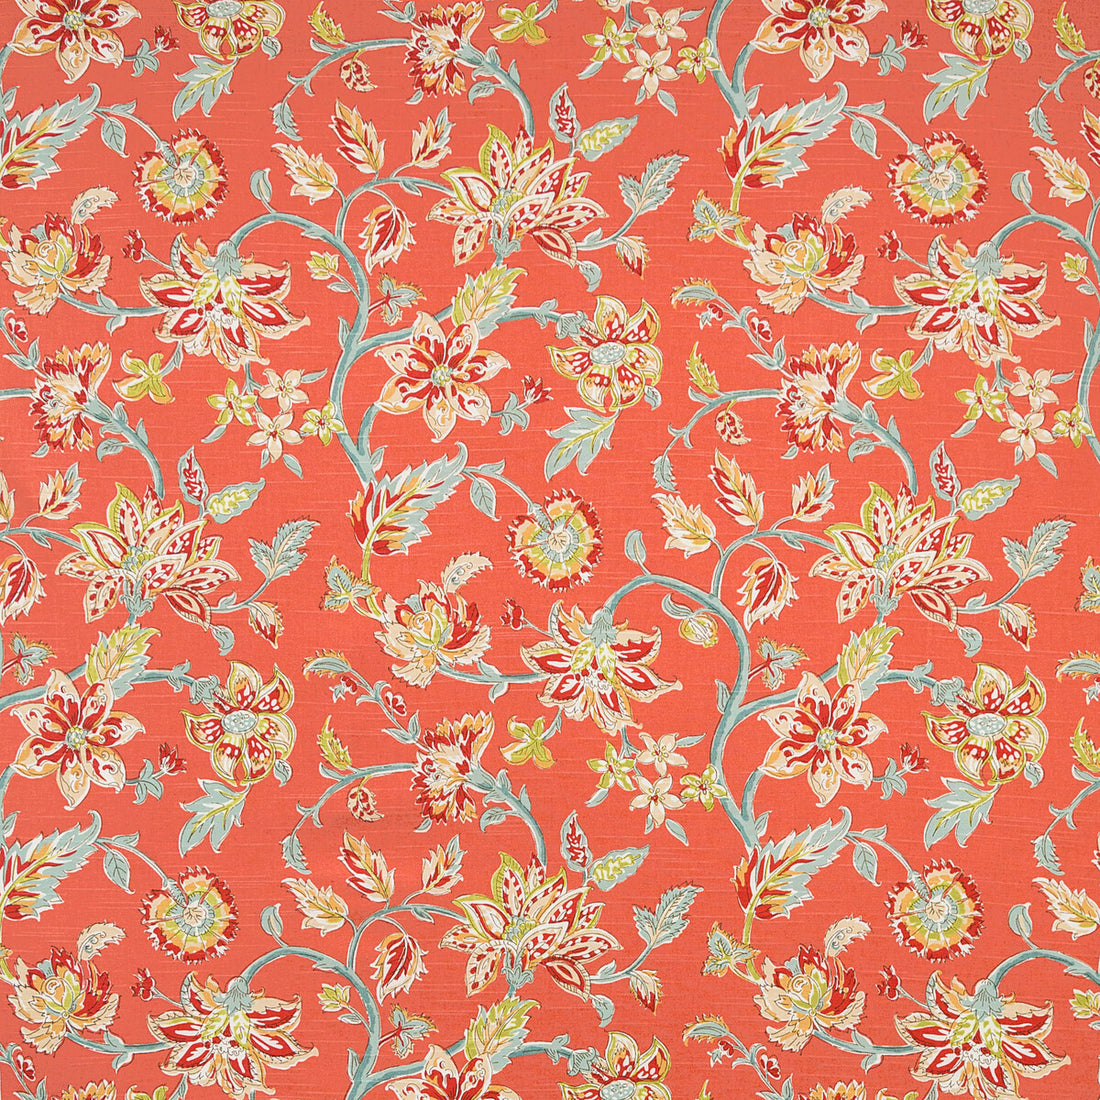 Tiru VIne fabric in parade color - pattern TIRU VINE.12.0 - by Kravet Basics in the Ceylon collection